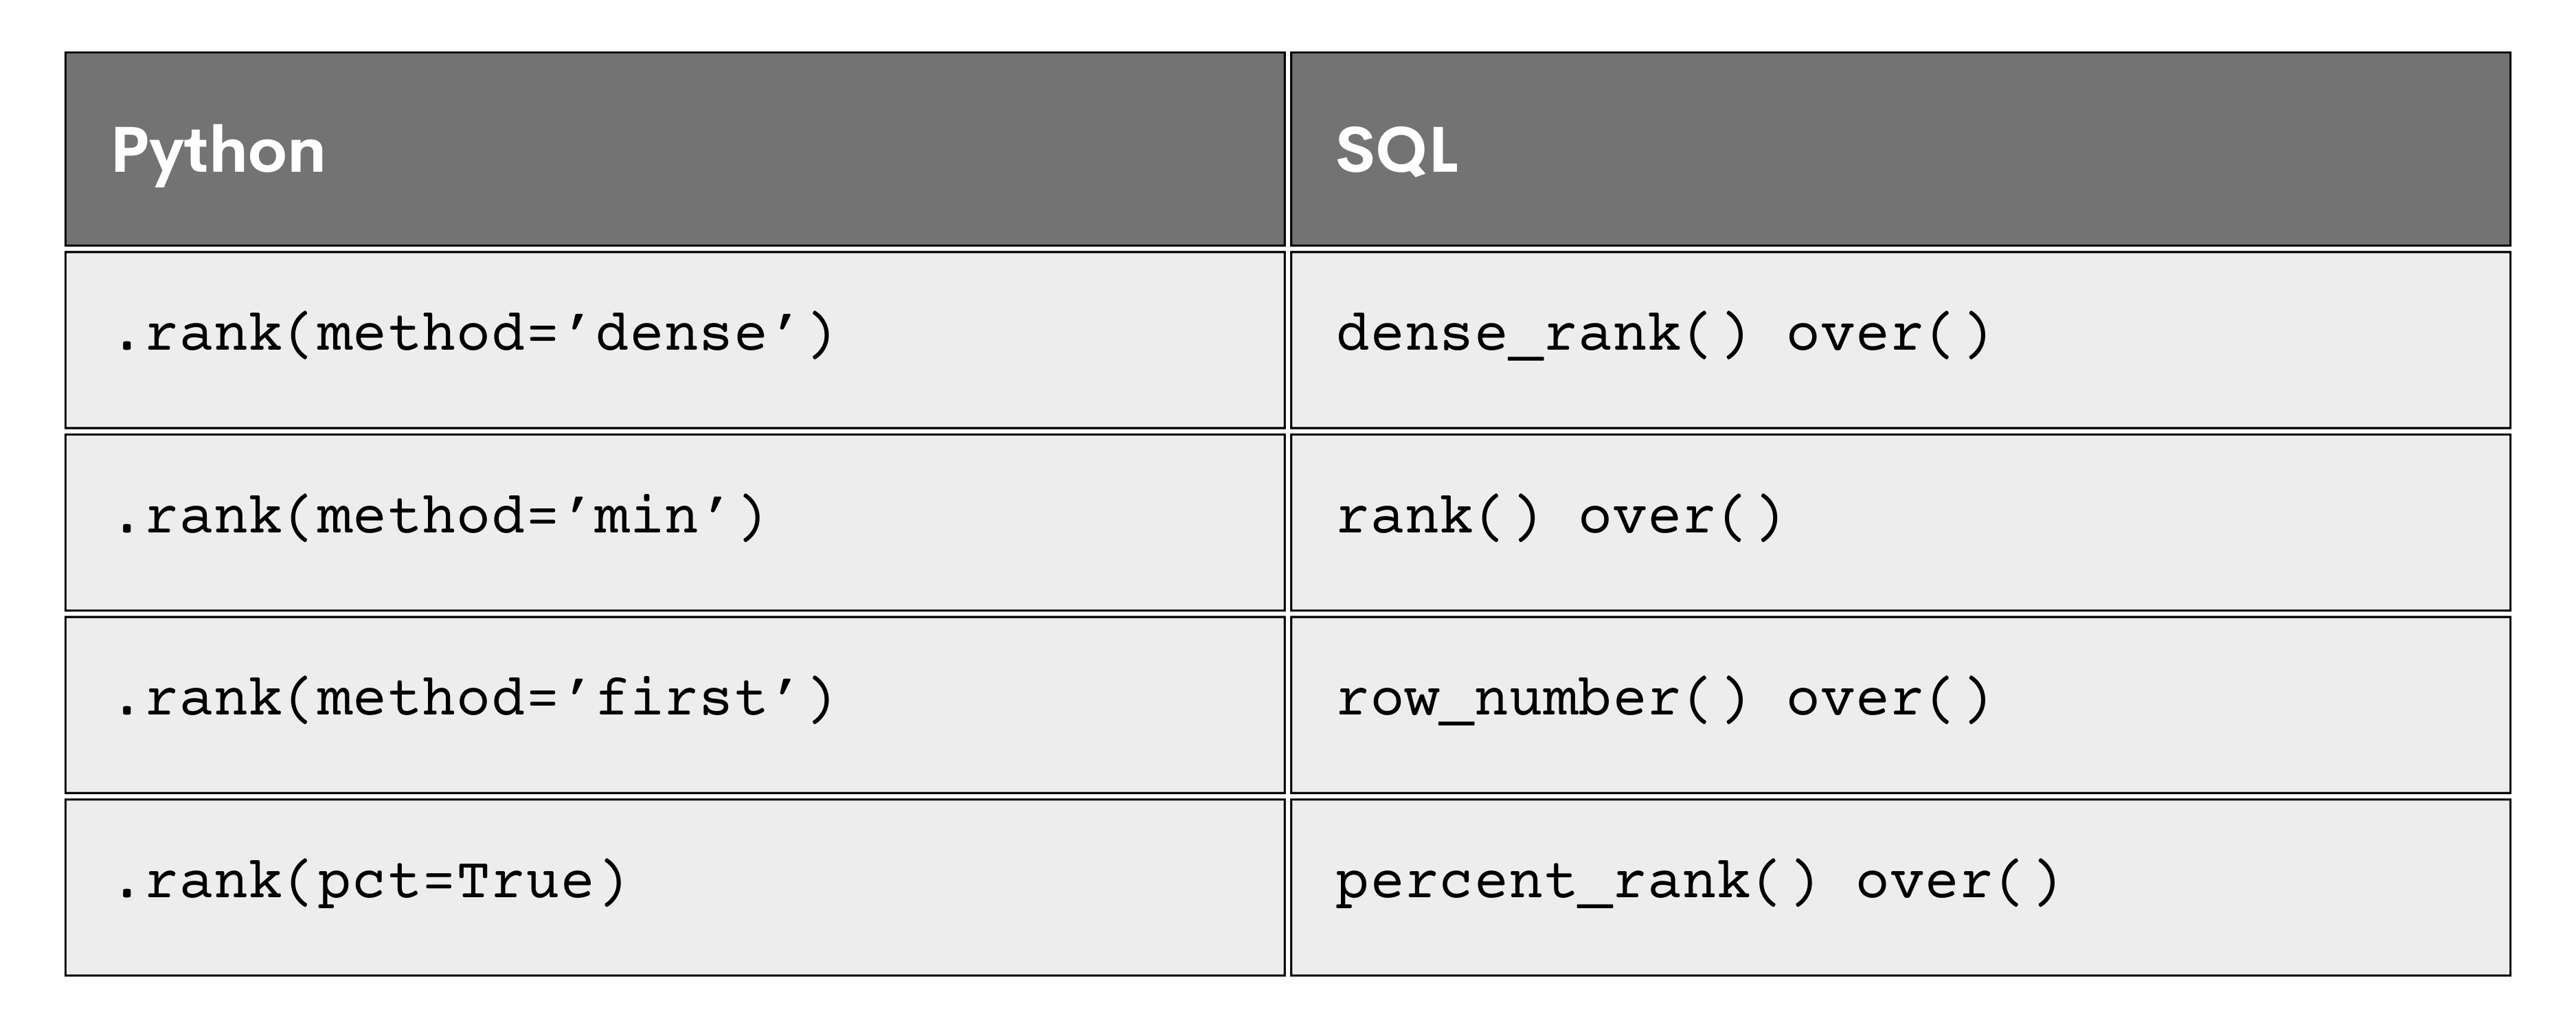 Python ranking and SQL ranking